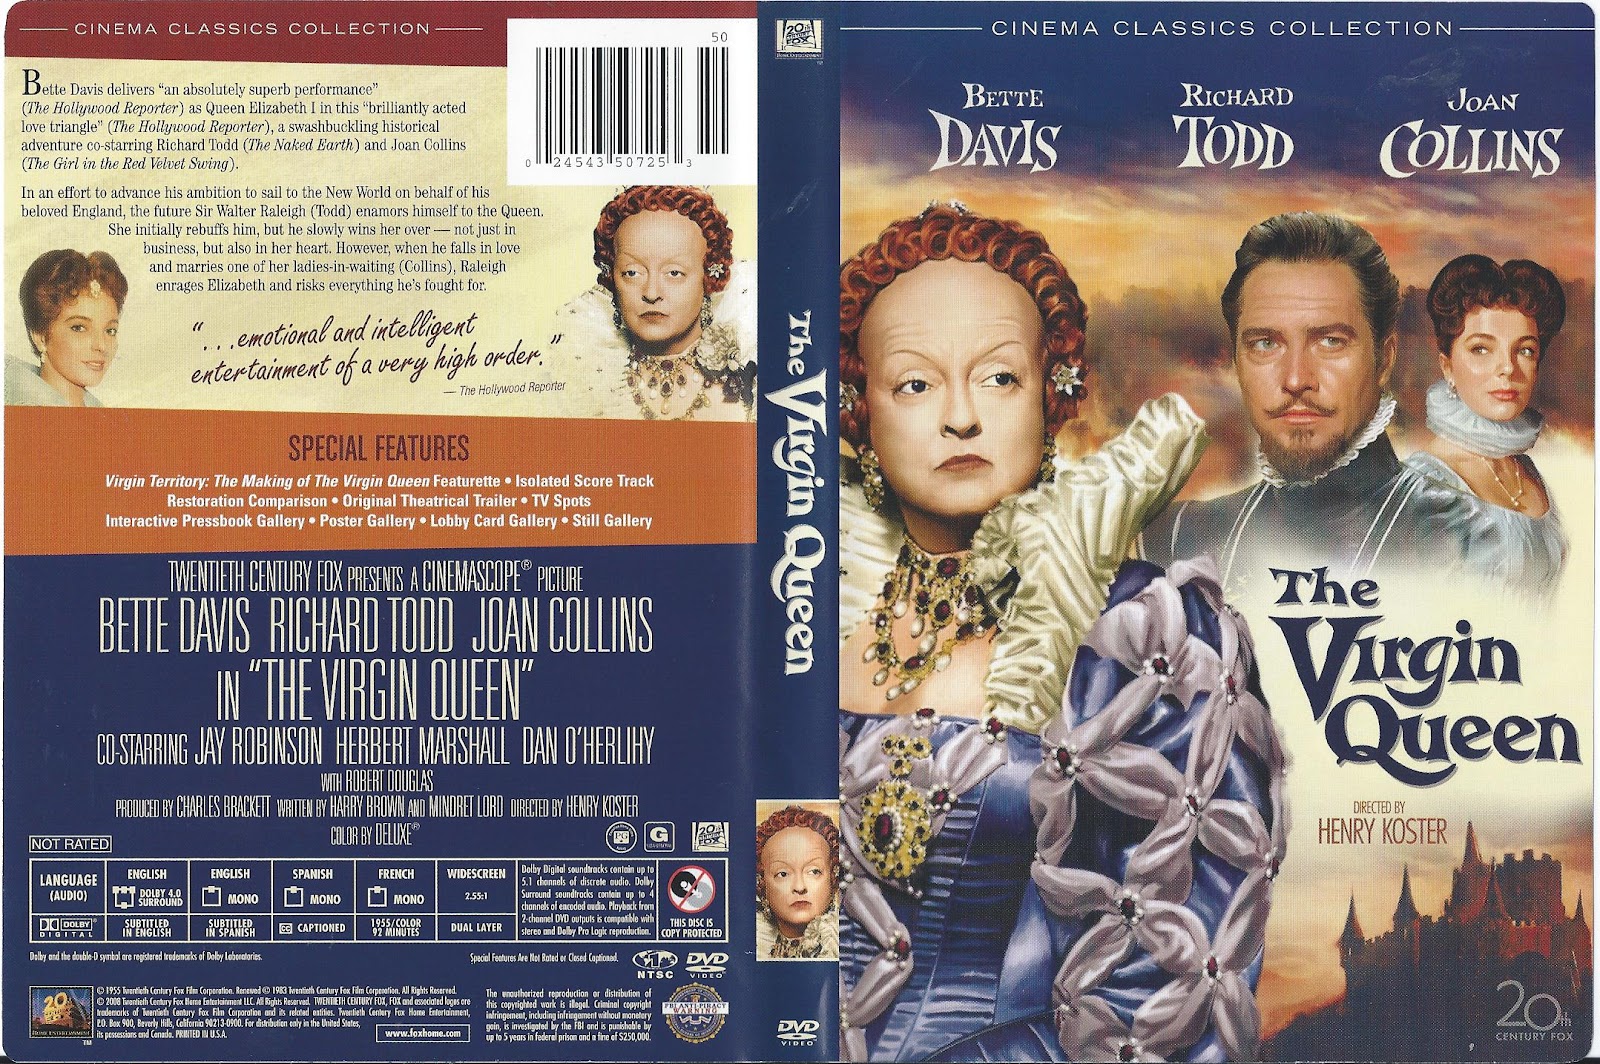 Legendary Dame Dvd Update The Virgin Queen th Century Fox Home Entertainment Region 1 08